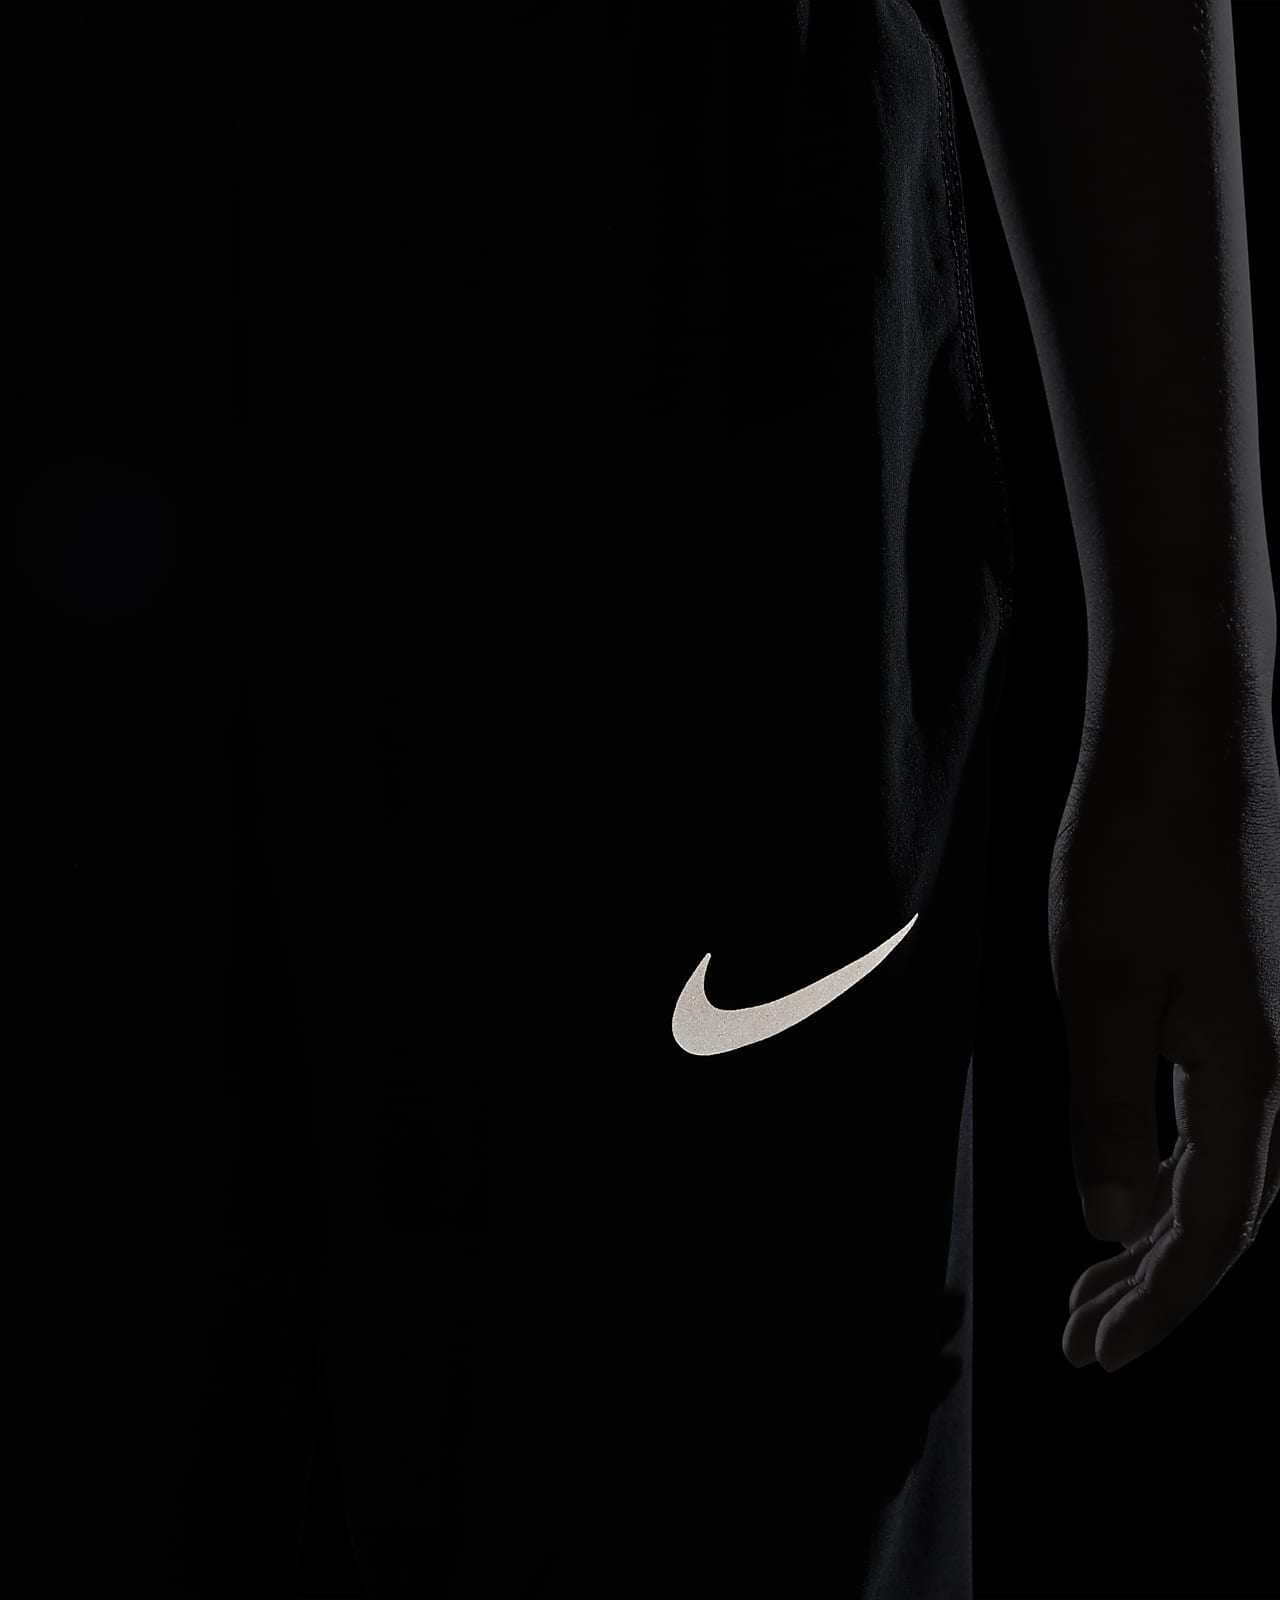 [26+] Nike Boy Wallpapers | WallpaperSafari